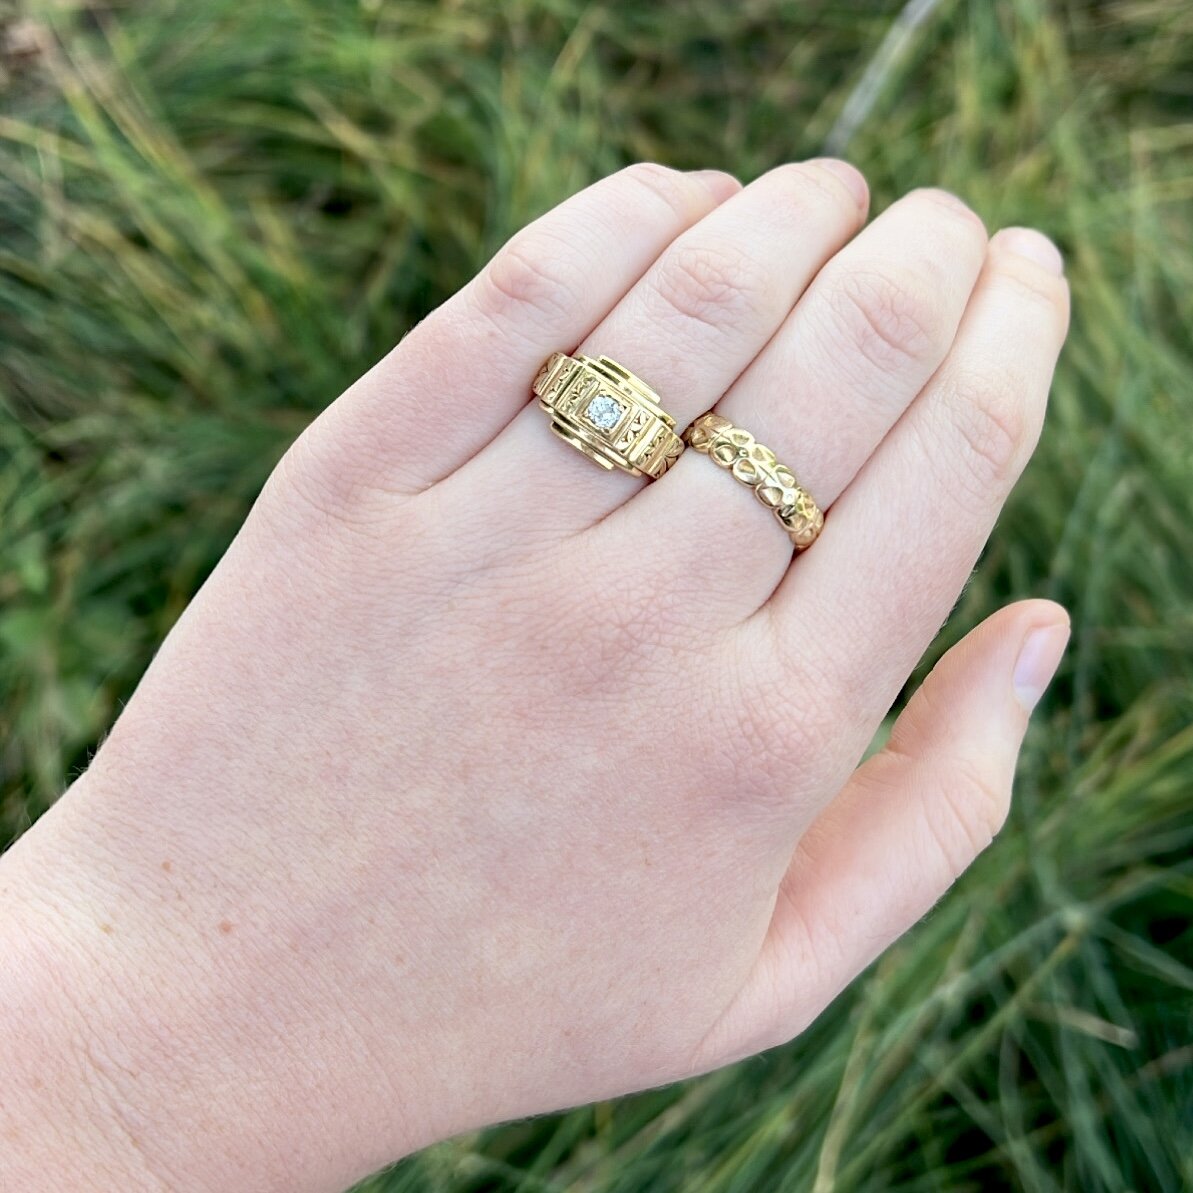 Antique Gold Ring Designs for Engagement/Wedding/Rasam/Gift for Girls 2020  - YouTube